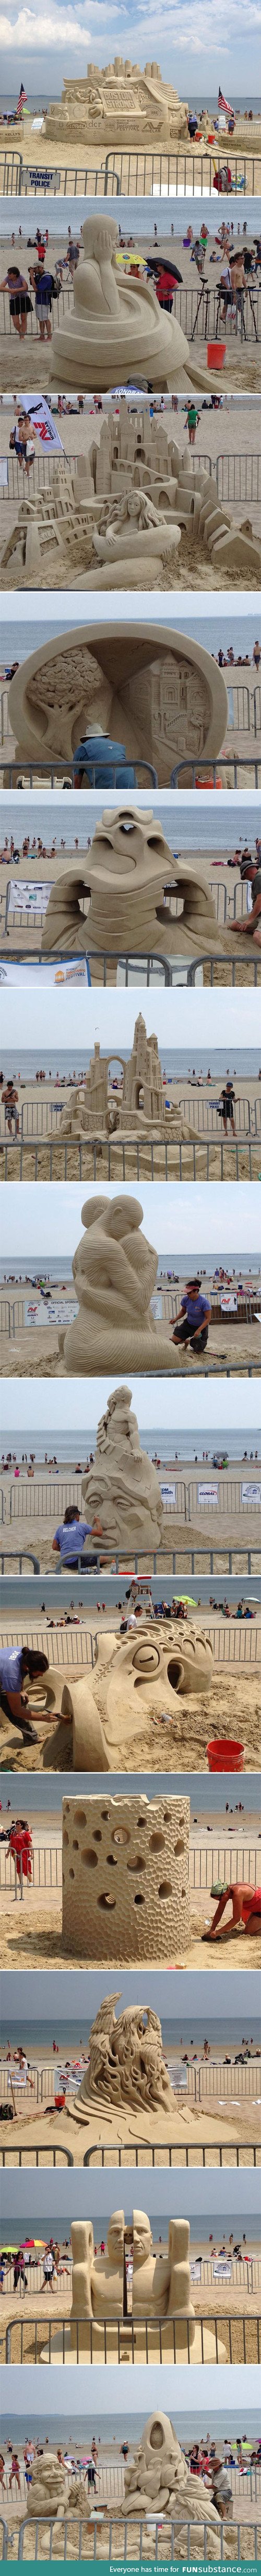 Sand art